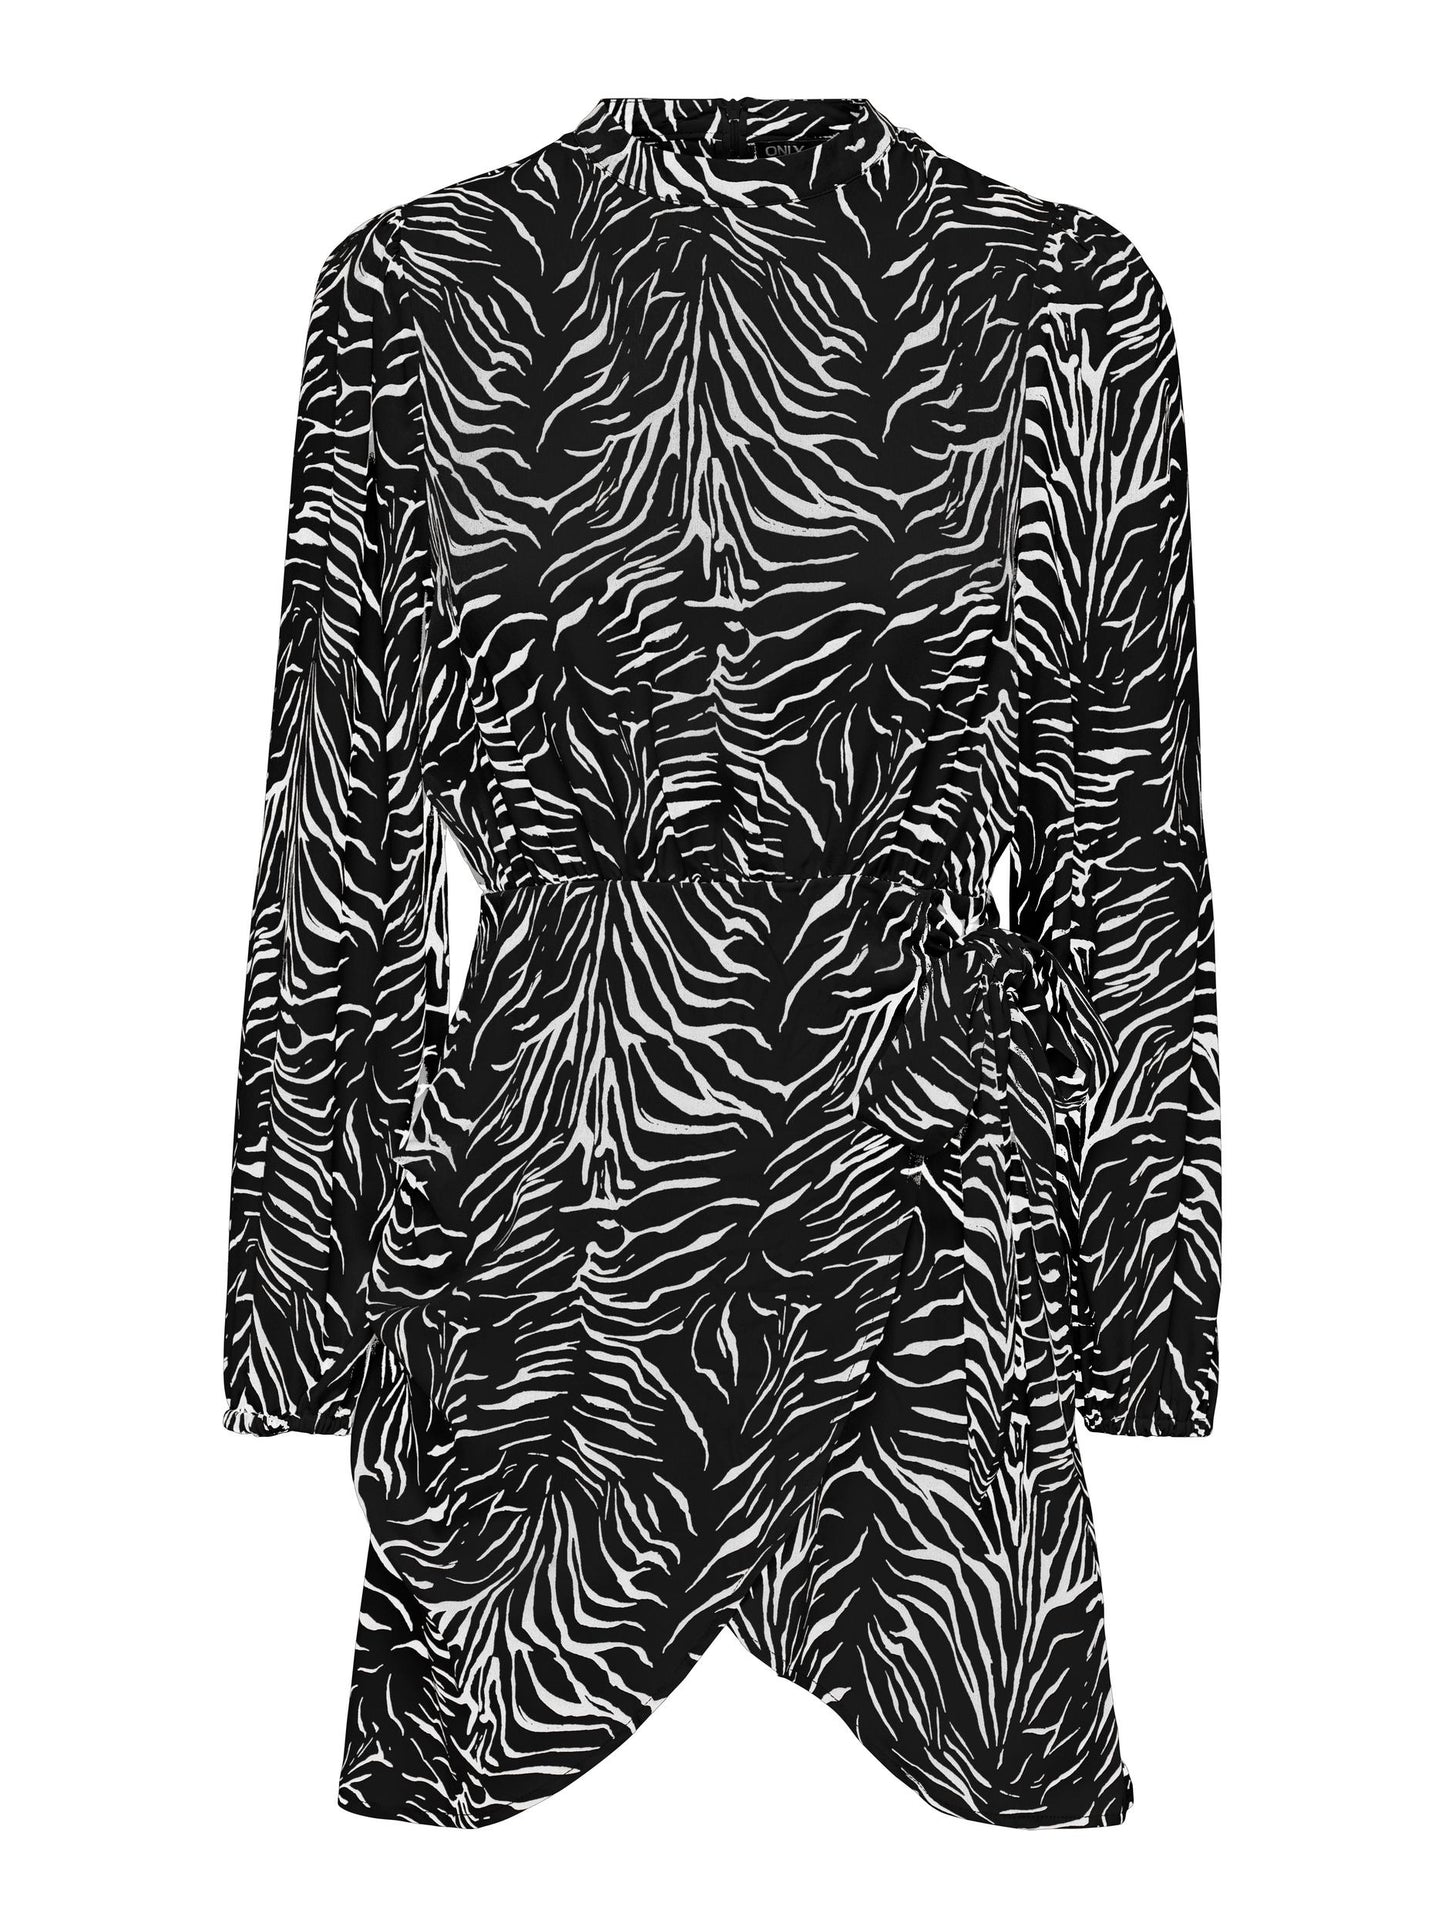 
                  
                    ONLY Mille Zebra Animal Print High Neck Wrap Skirt Mini Dress in Black & Cream - One Nation Clothing
                  
                